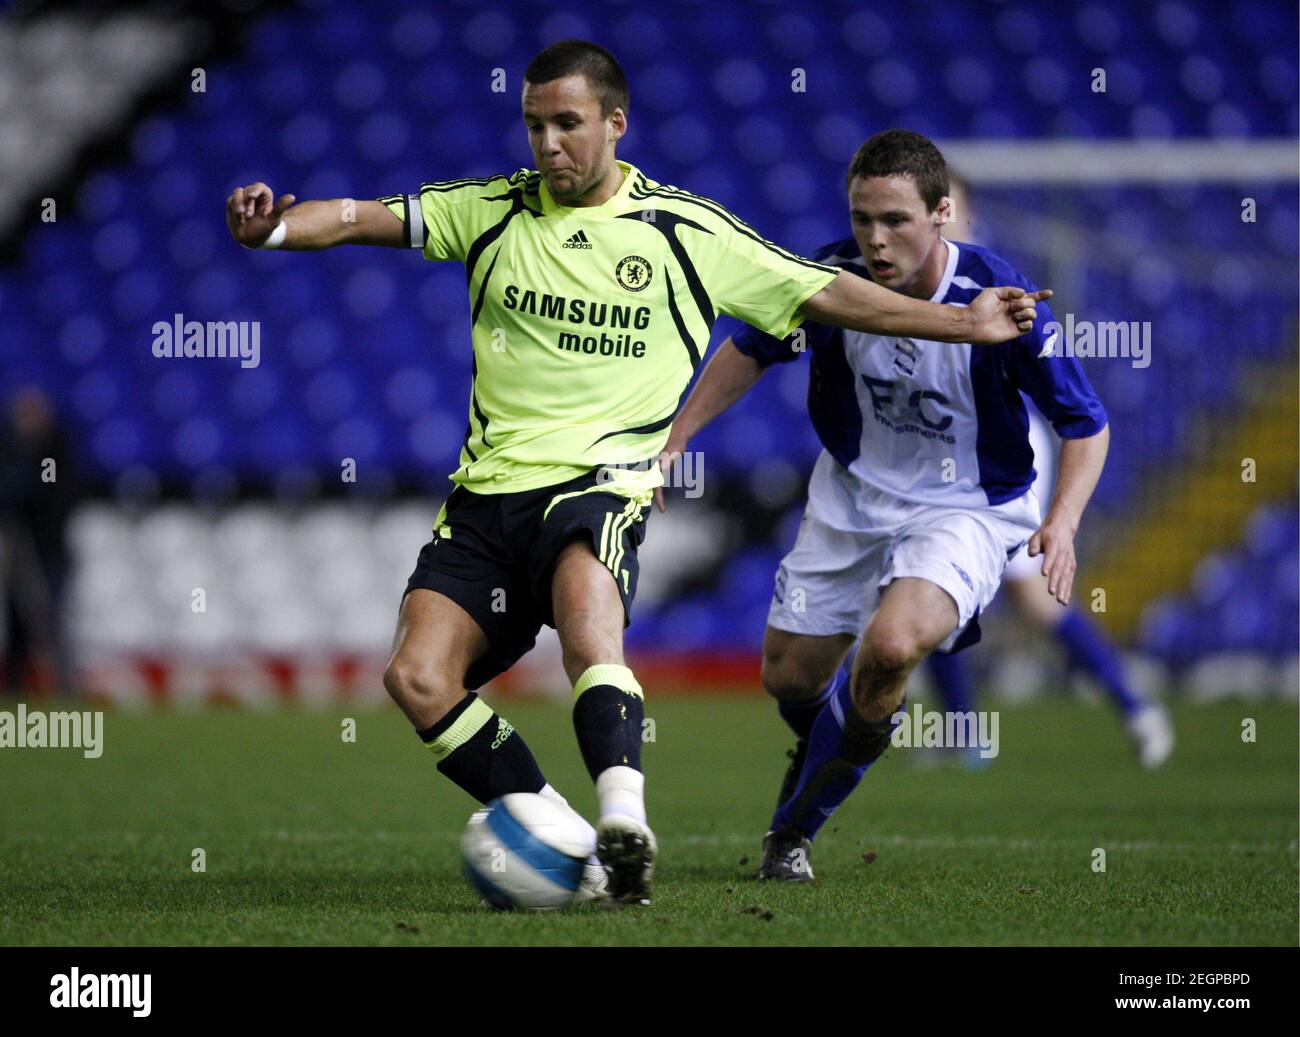 Football - Birmingham City Reserves v Chelsea Reserves - Barclays Premier  Reserve League South - St Andrews - 07/08 -